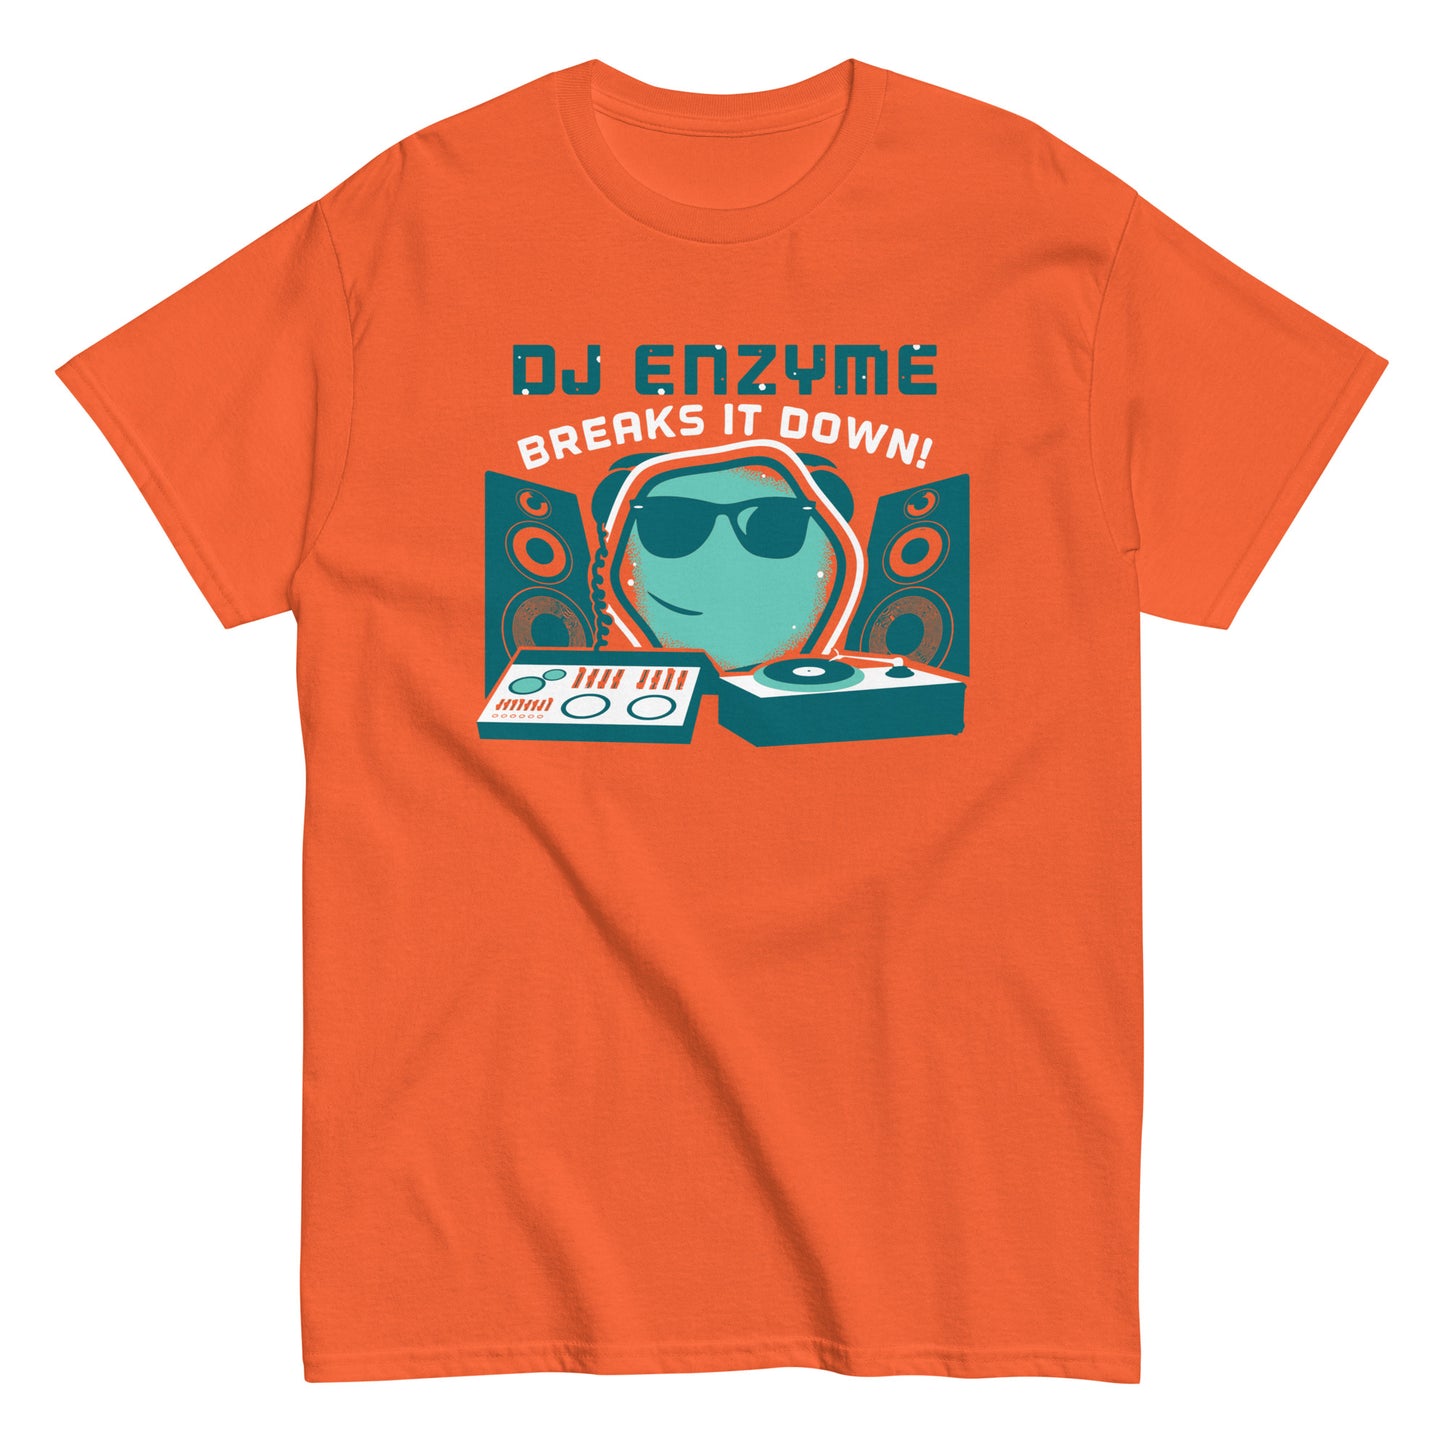 DJ Enzyme Men's Classic Tee